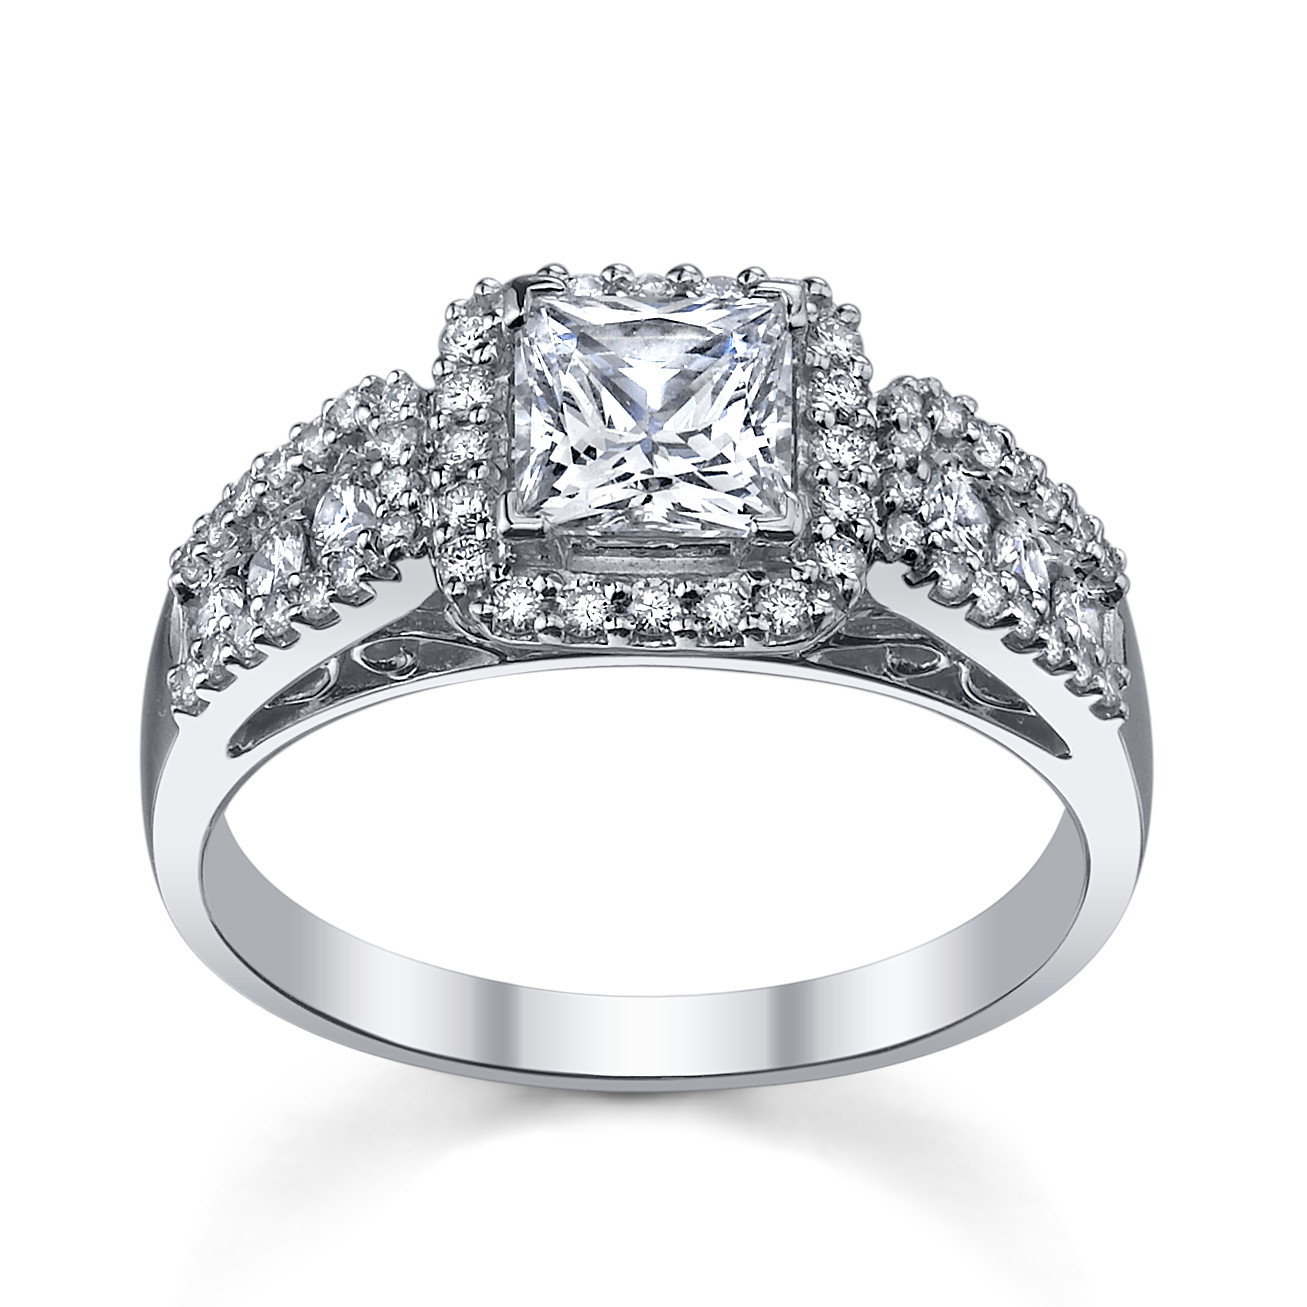 Princess Cut Wedding Rings
 6 Princess Cut Engagement Rings She ll Love Robbins